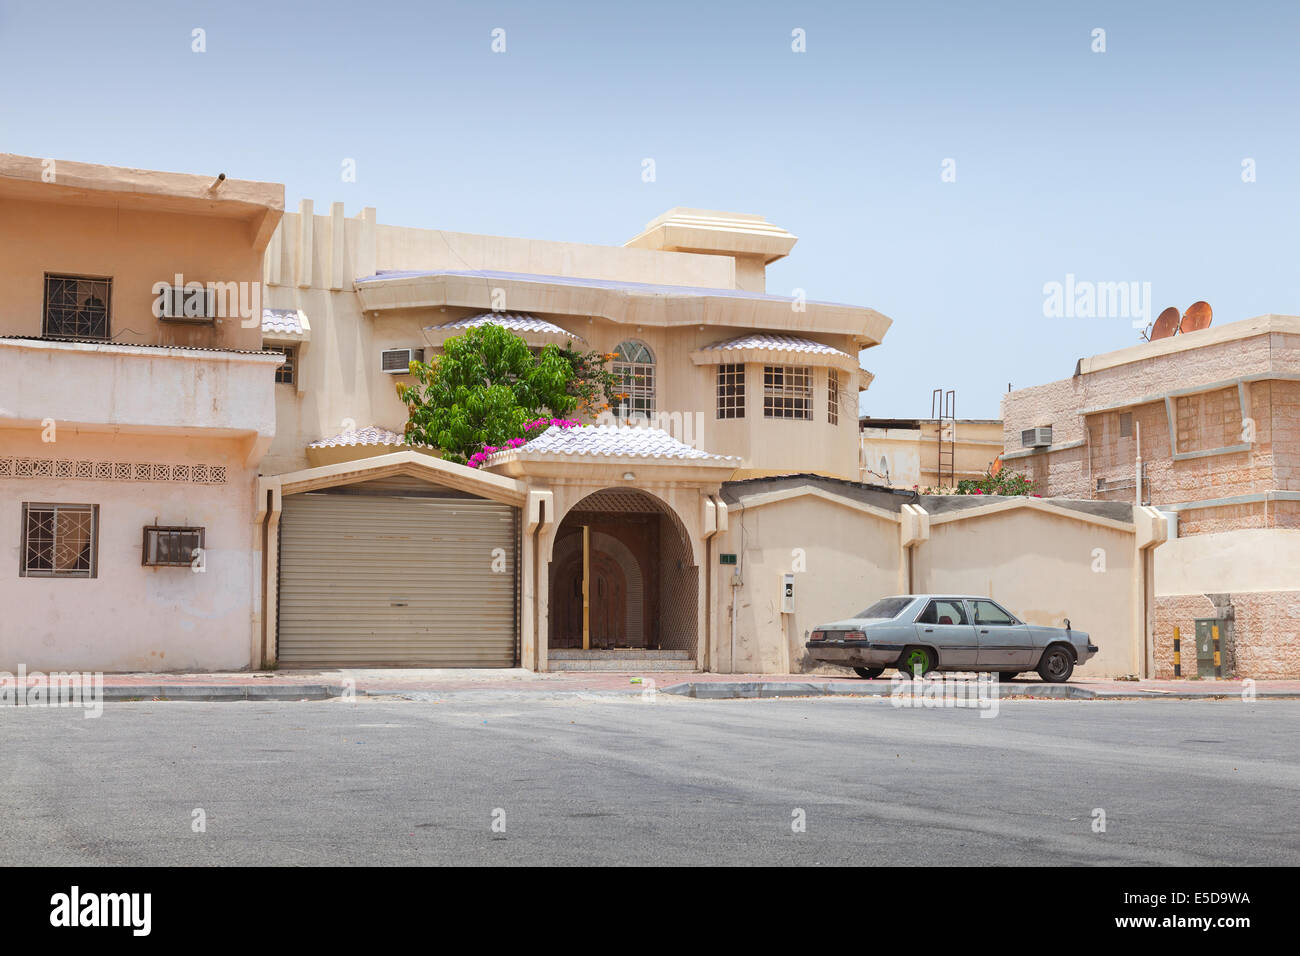 Street view con la vecchia auto parcheggiata, Rahima town, Arabia Saudita Foto Stock